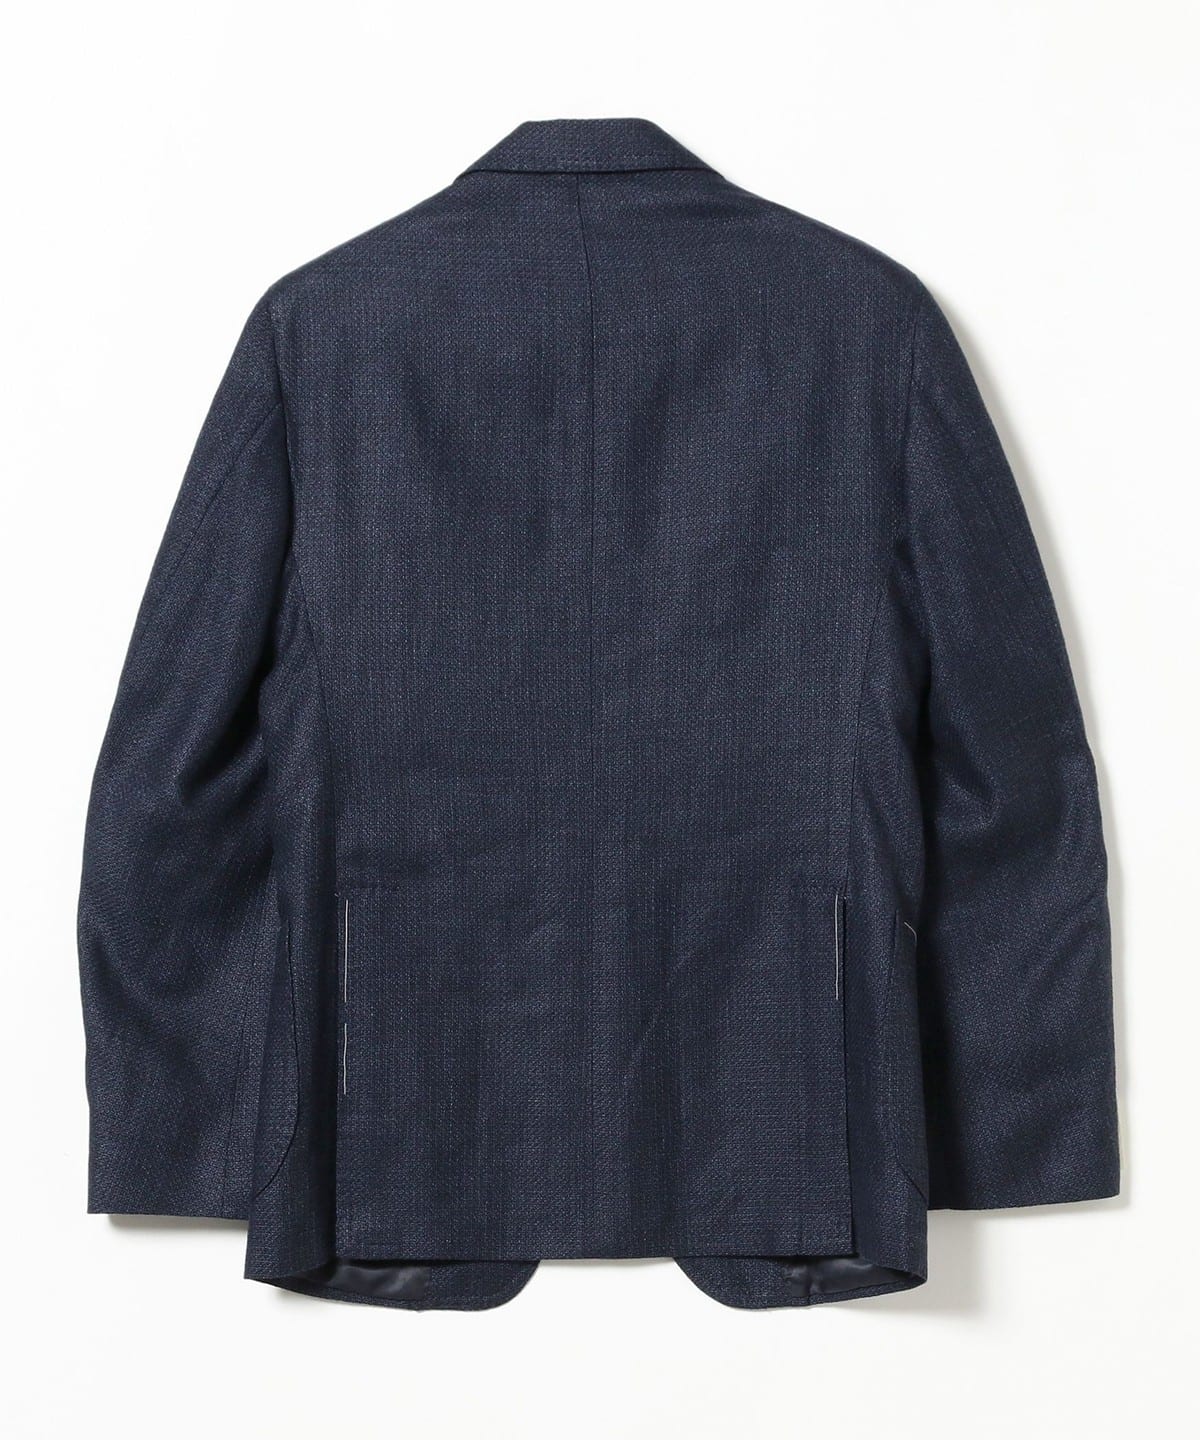 Gabo × Brilla per il gusto / Special order linen wool navy jacket